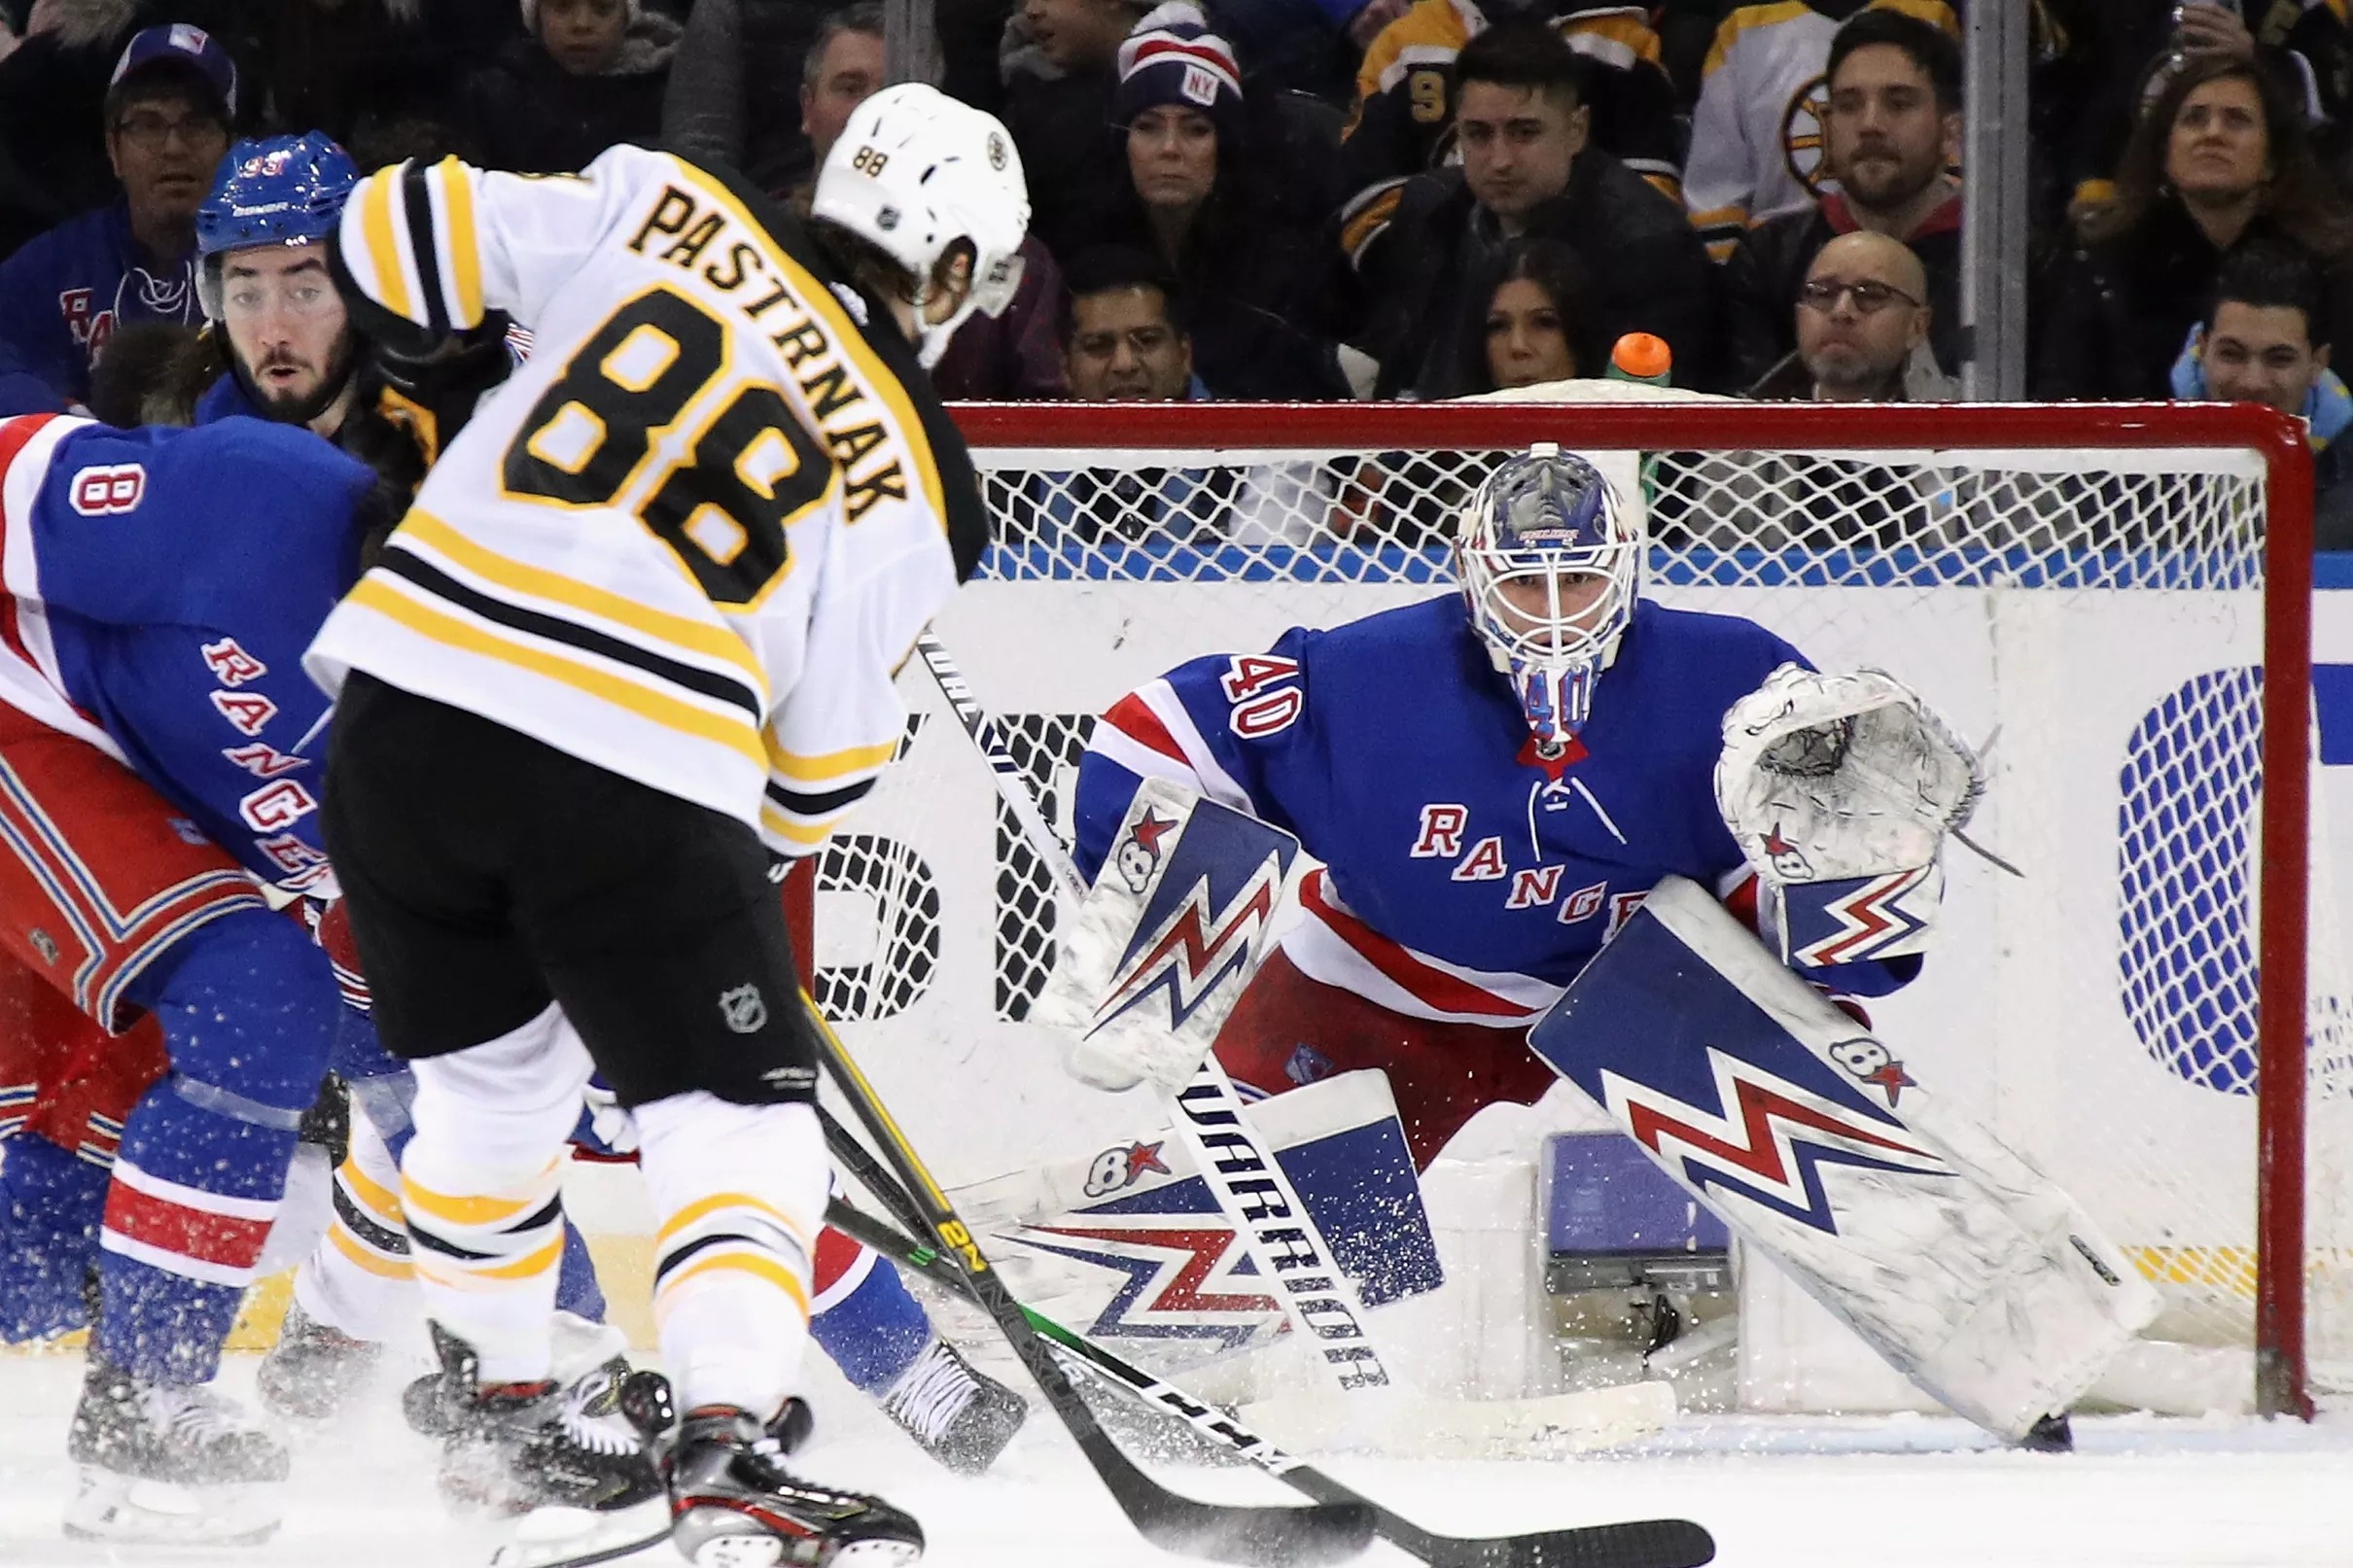 Rangers vs Bruins Bruins Top Rangers in Defensive Battle at MSG